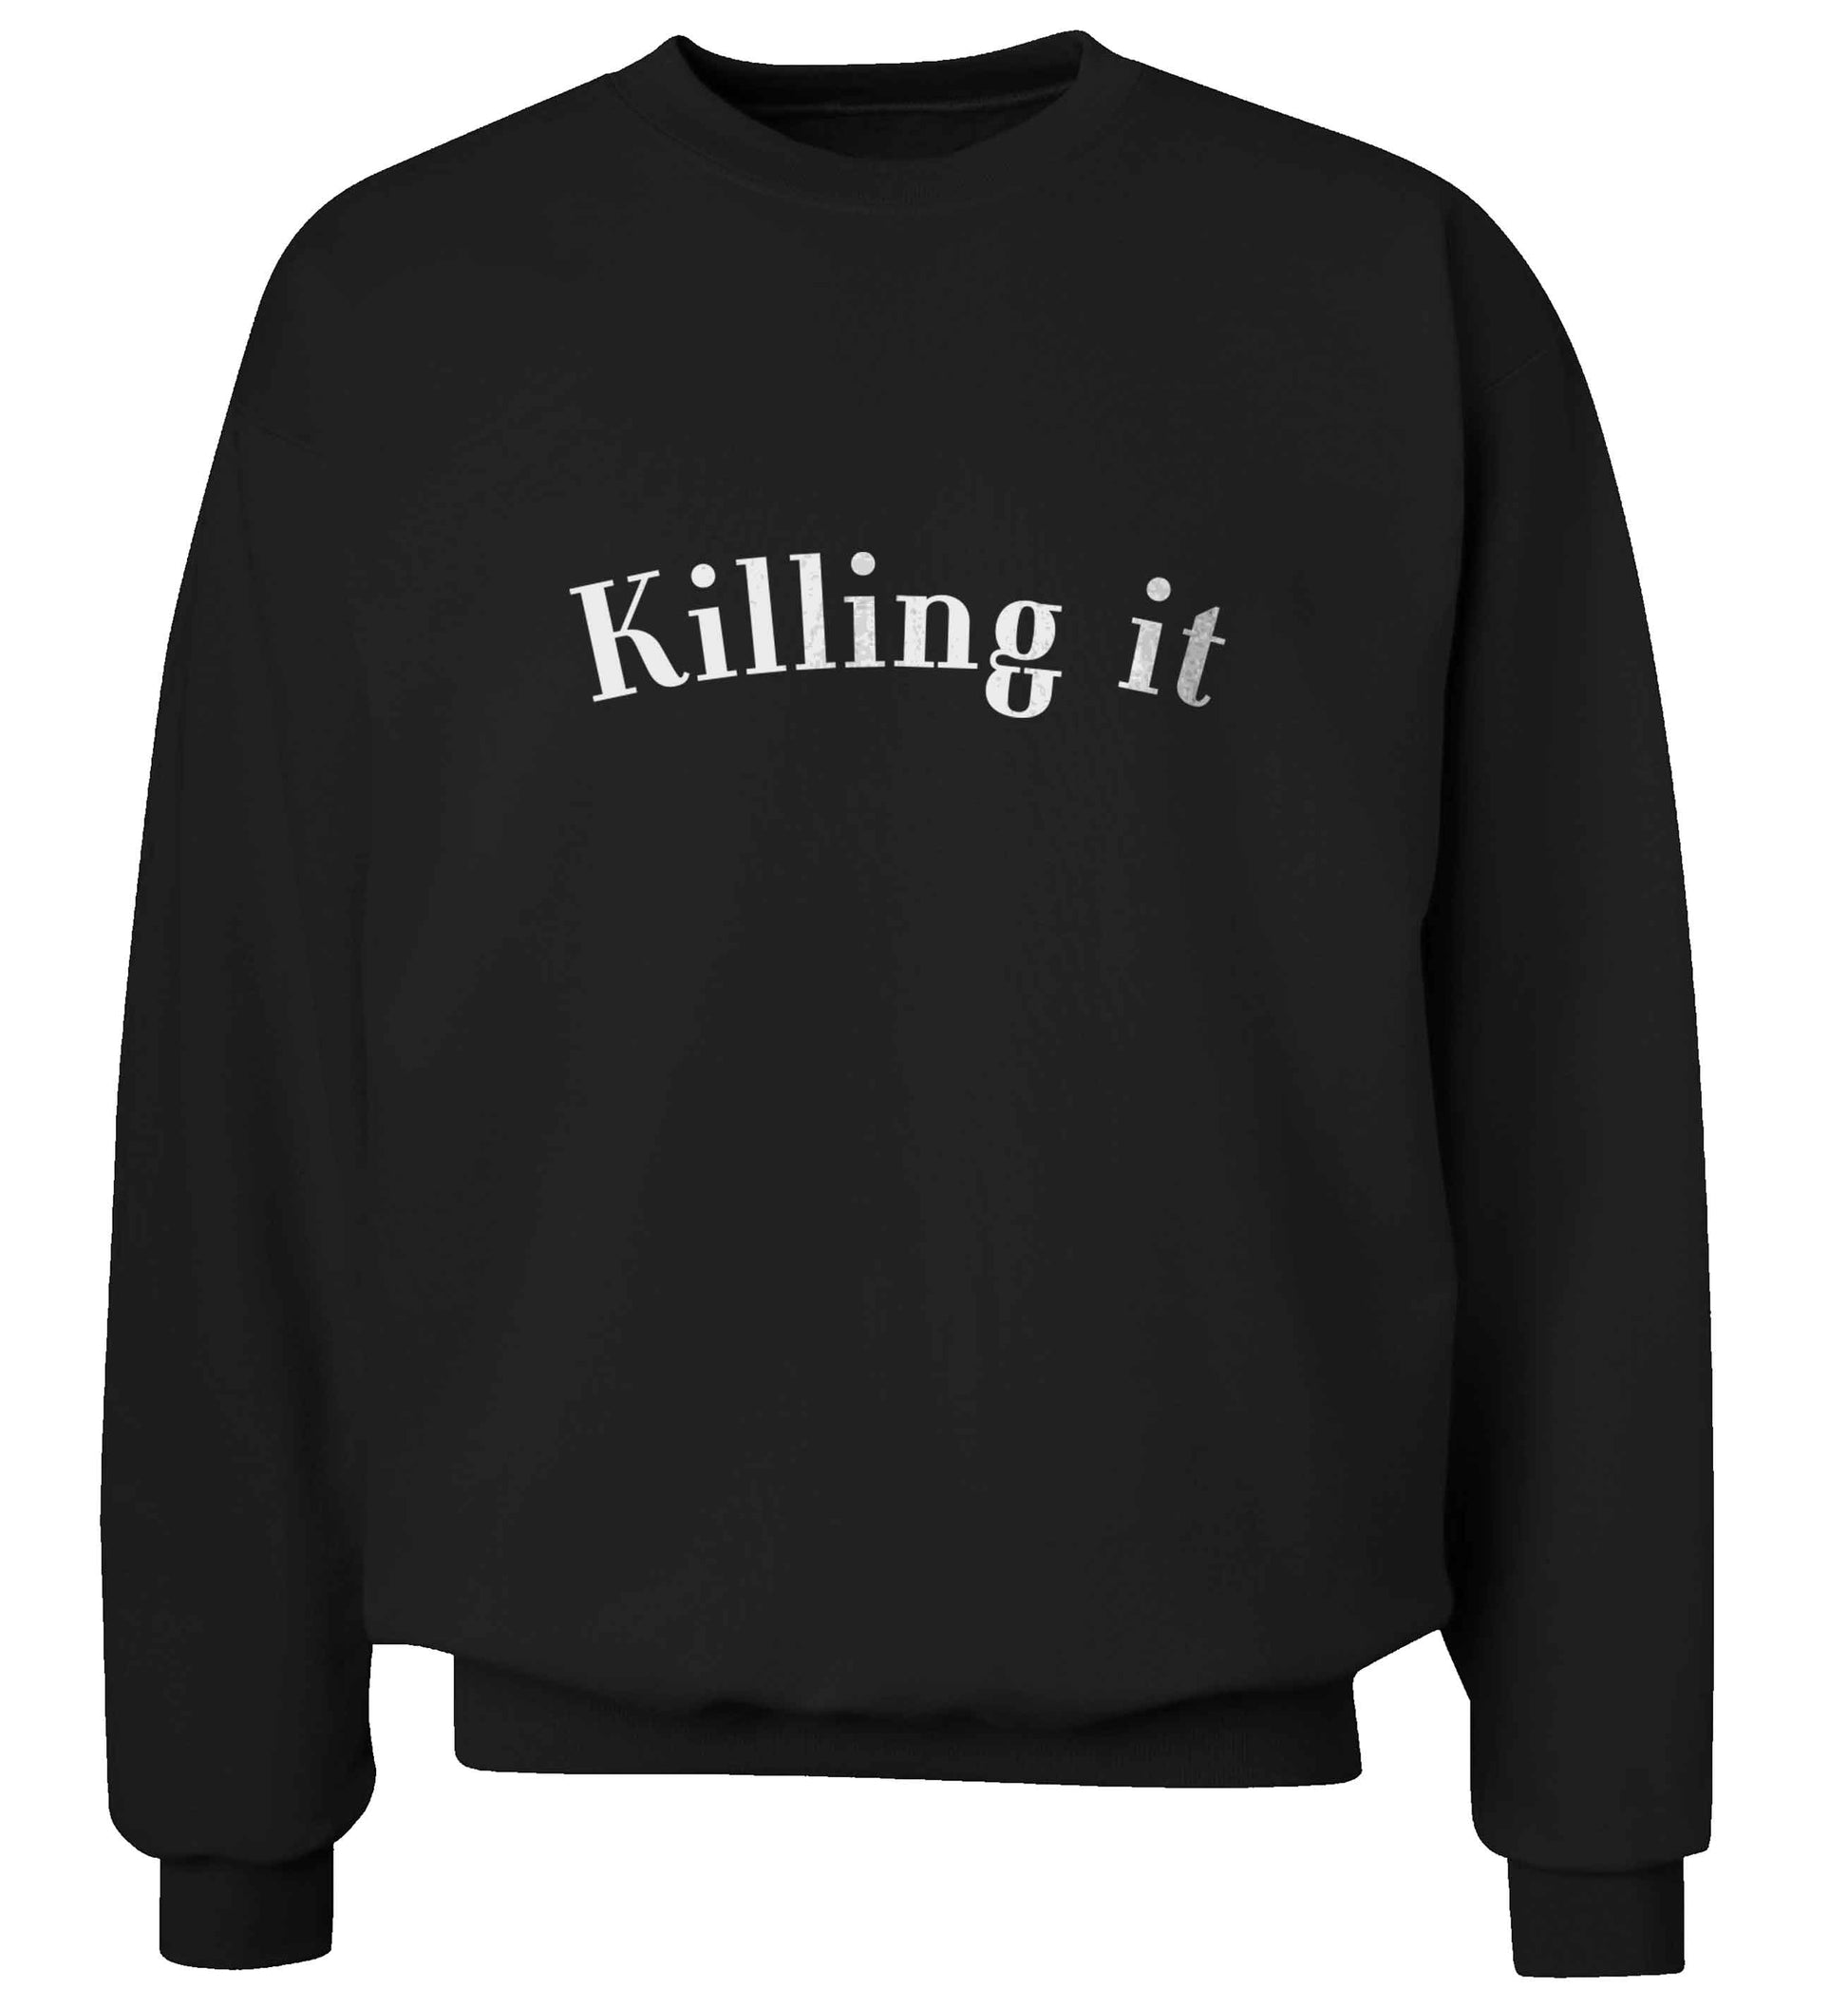 Killing it adult's unisex black sweater 2XL